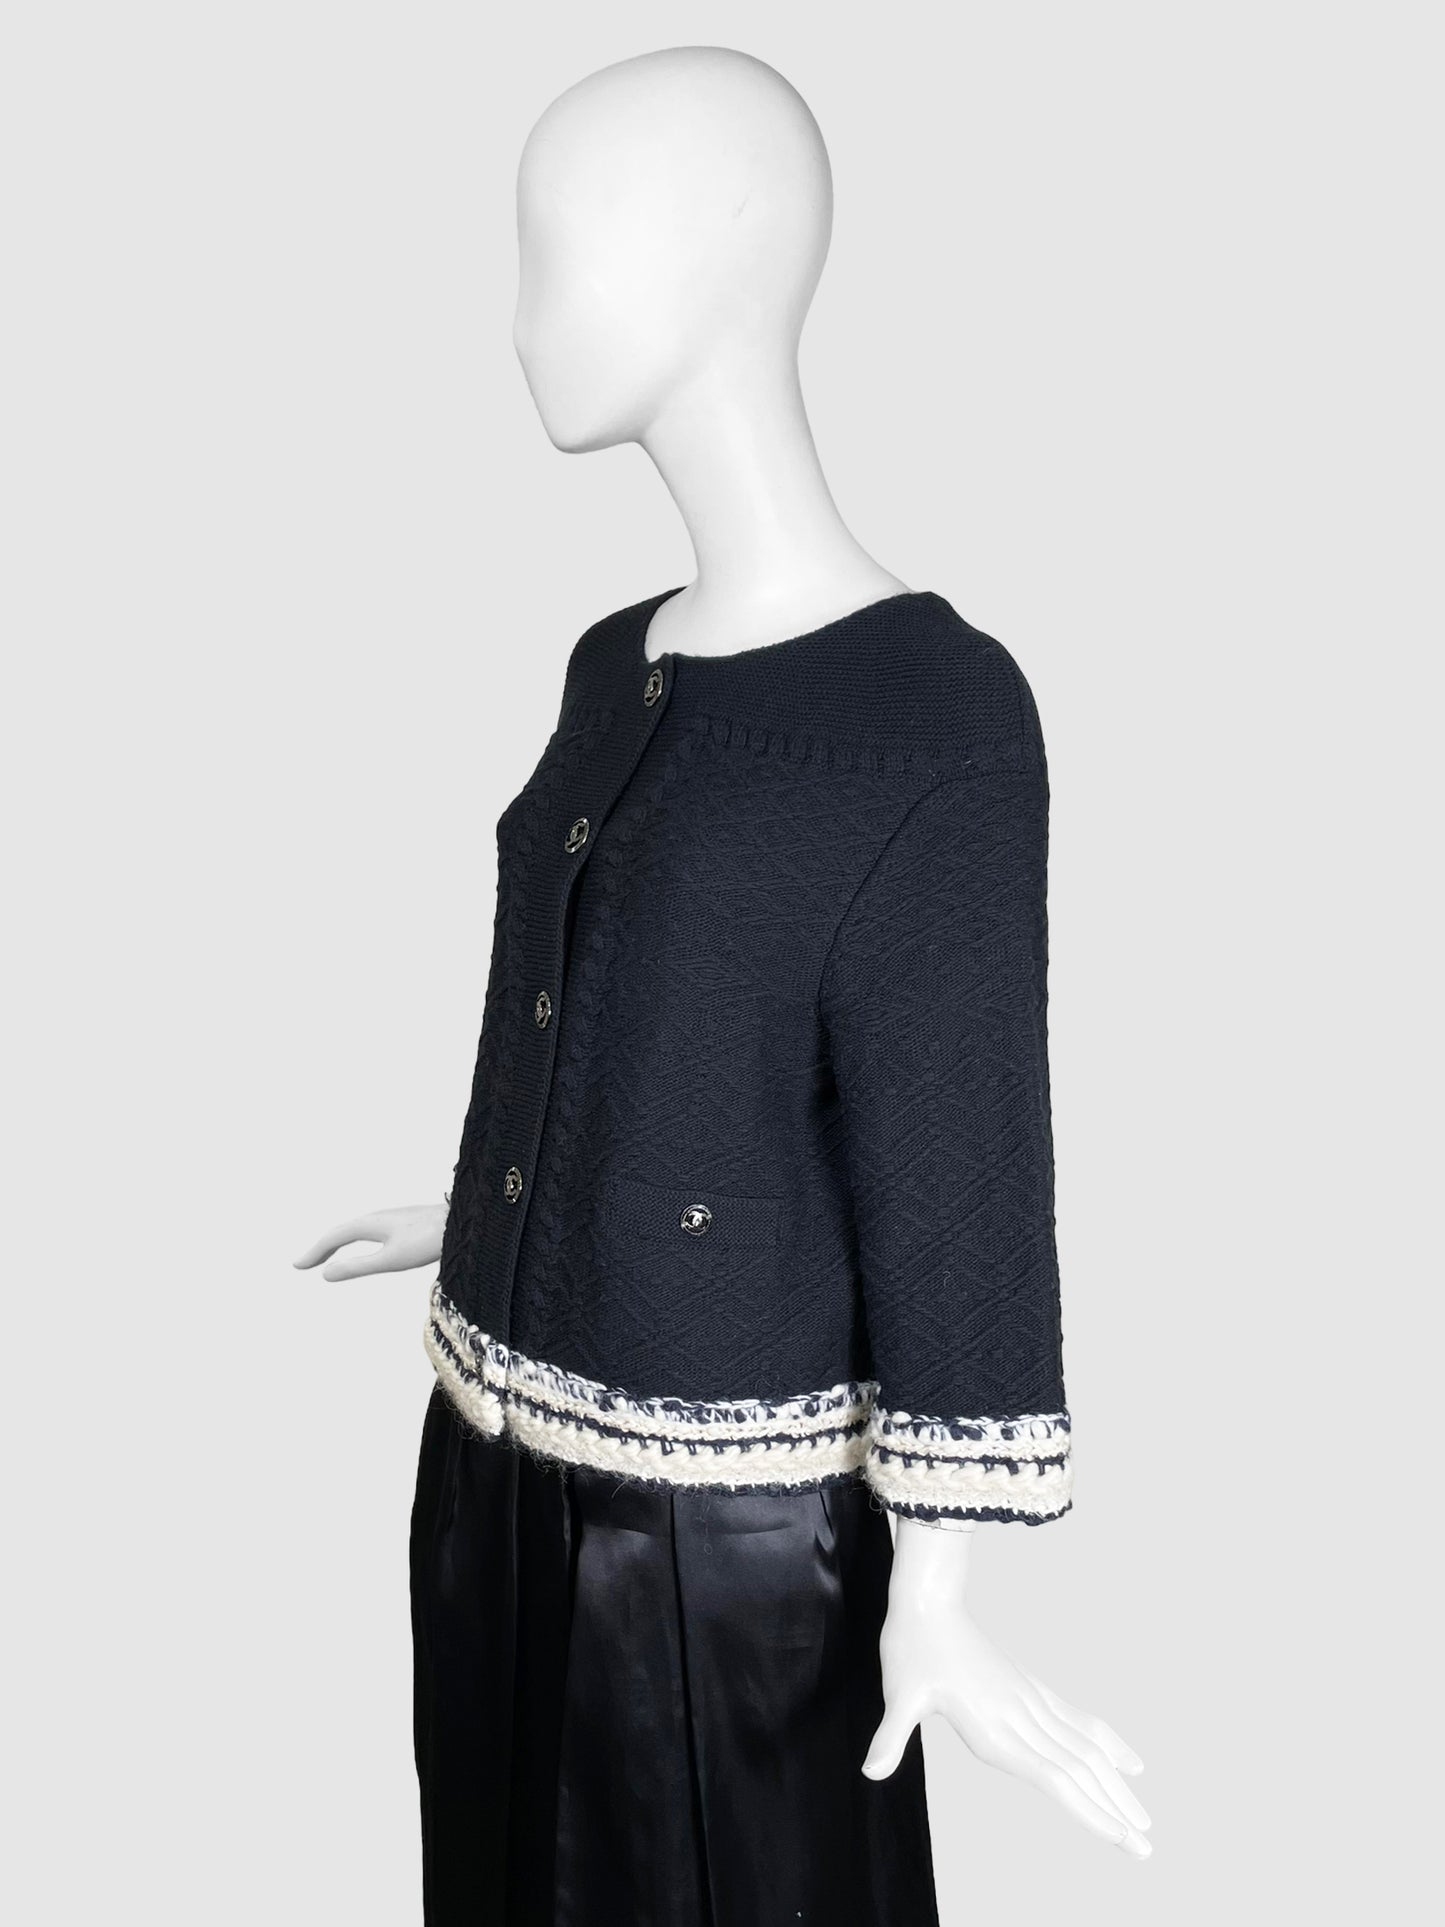 Chanel Cashmere Cardigan - Size 40